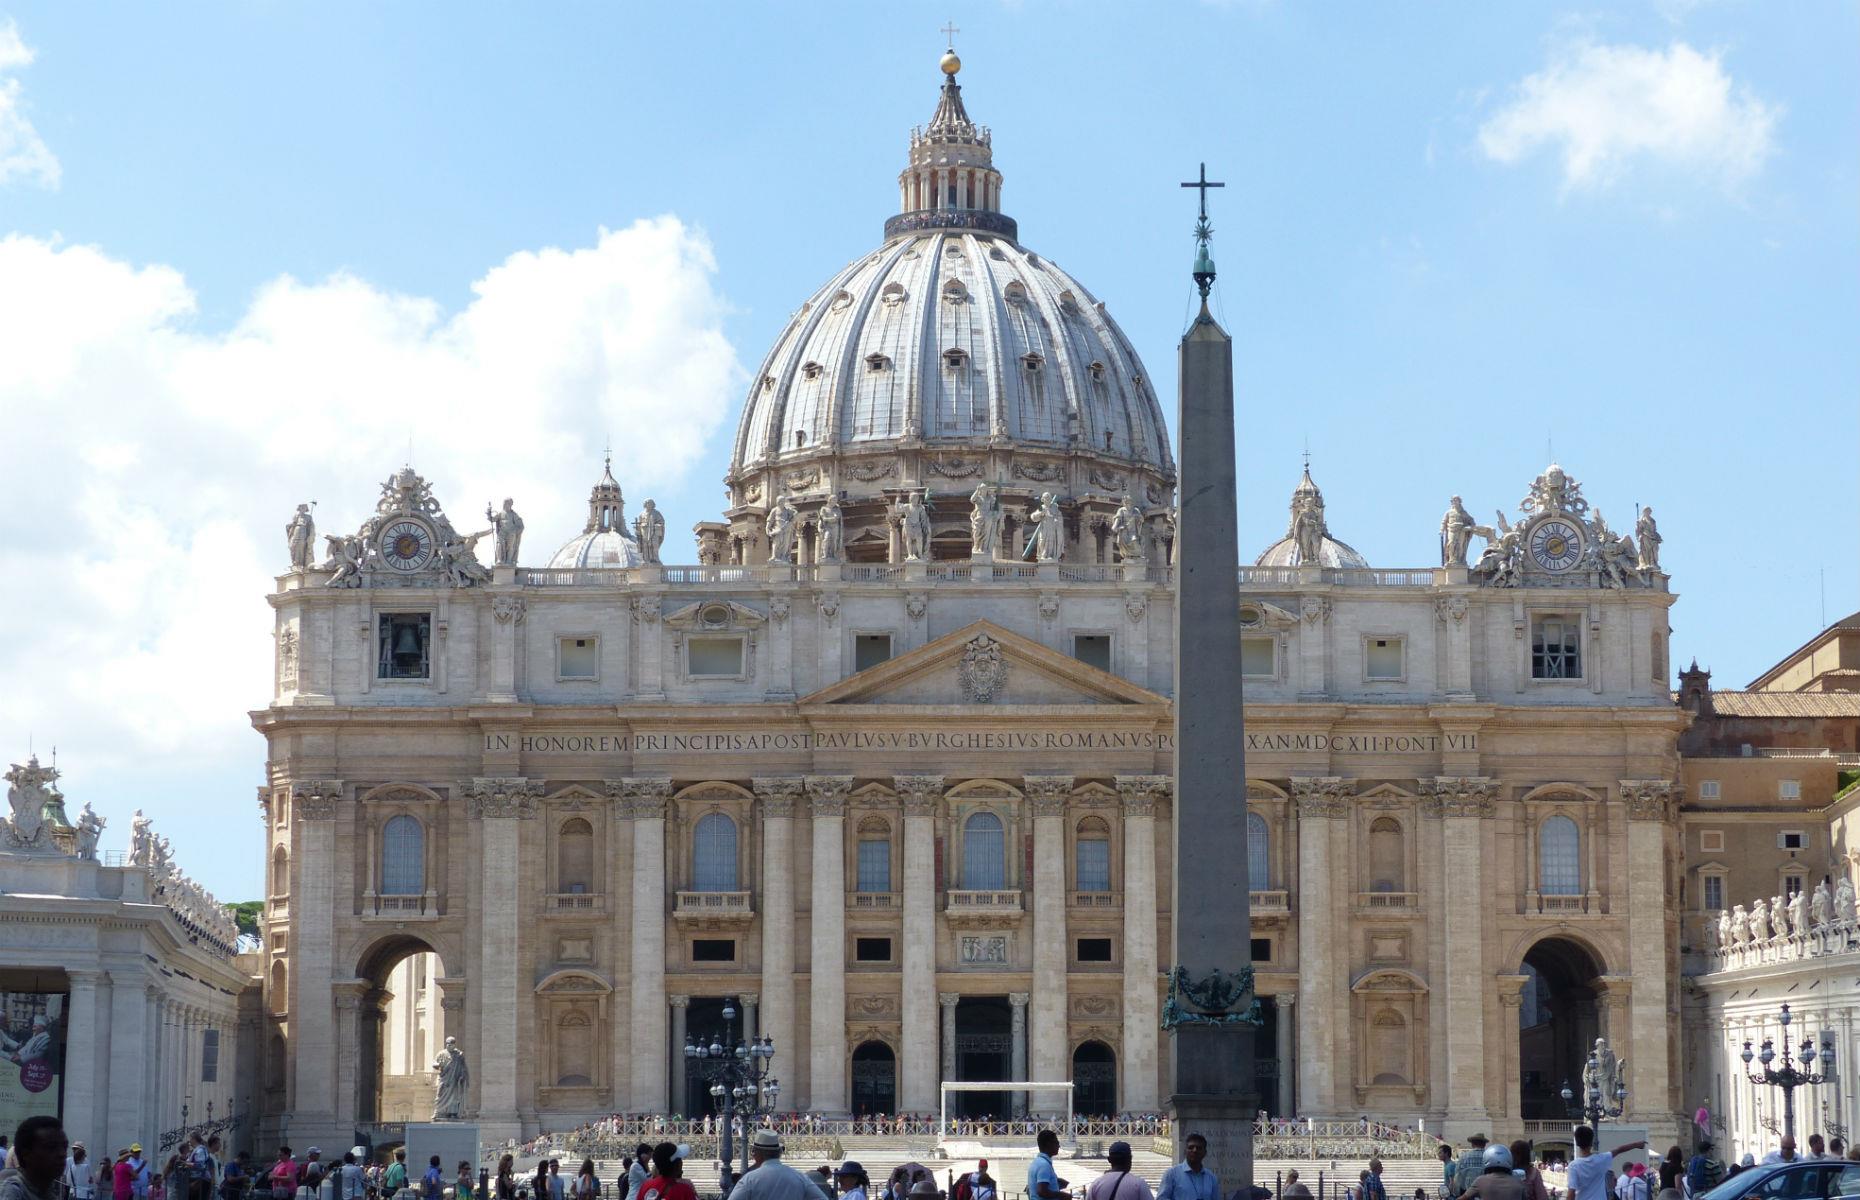 St Peter’s Basilica, Vatican City, Italy